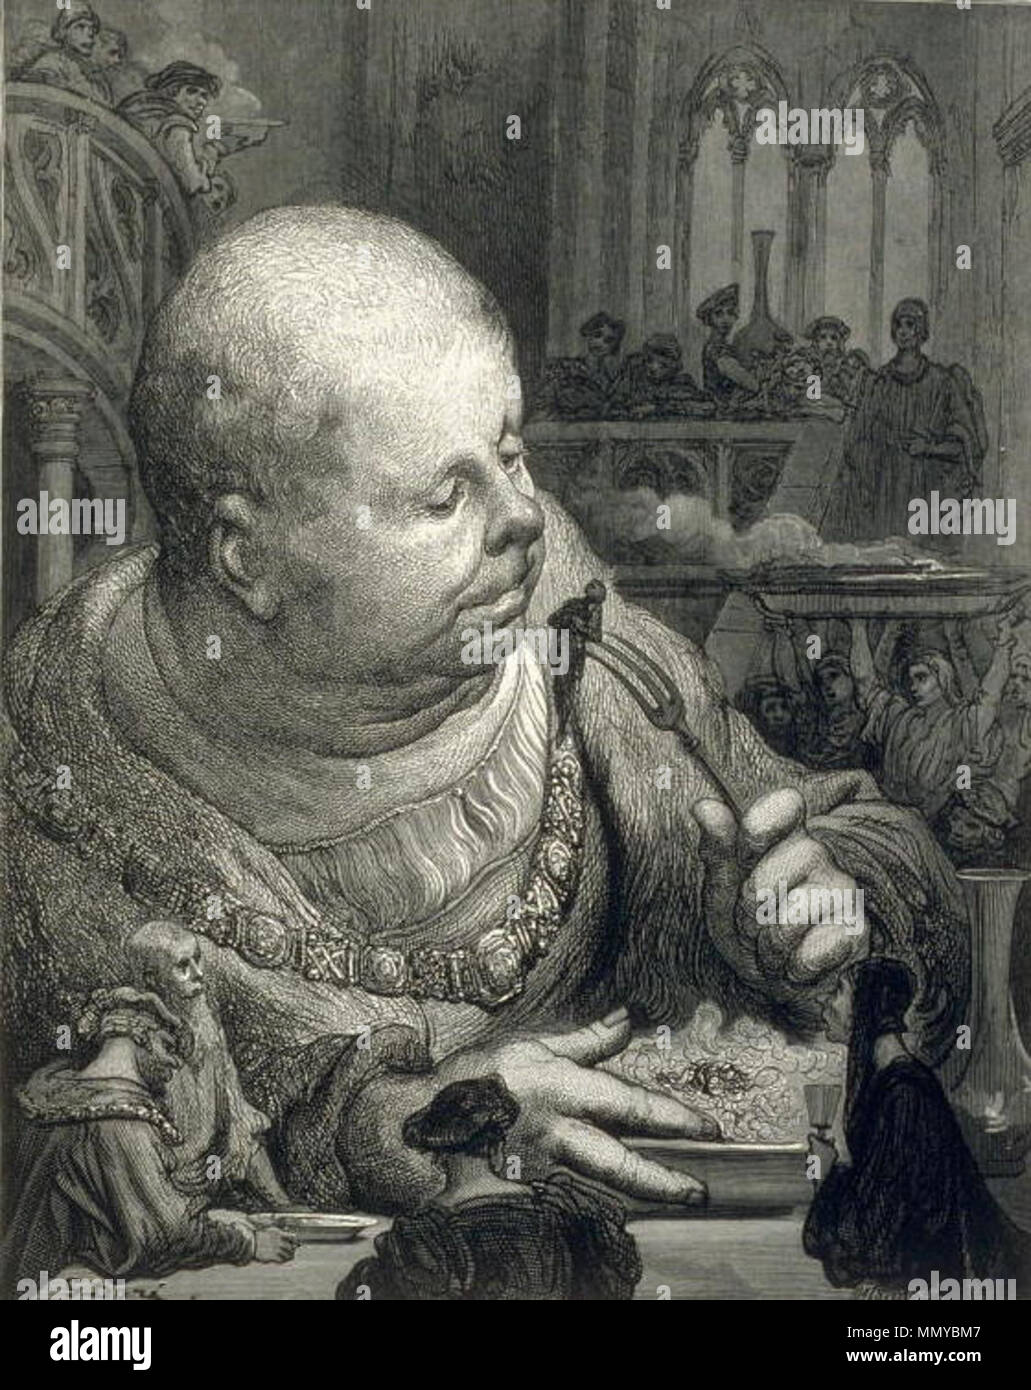 Gustave Doré - Gargantua Stock Photo: 184998695 - Alamy